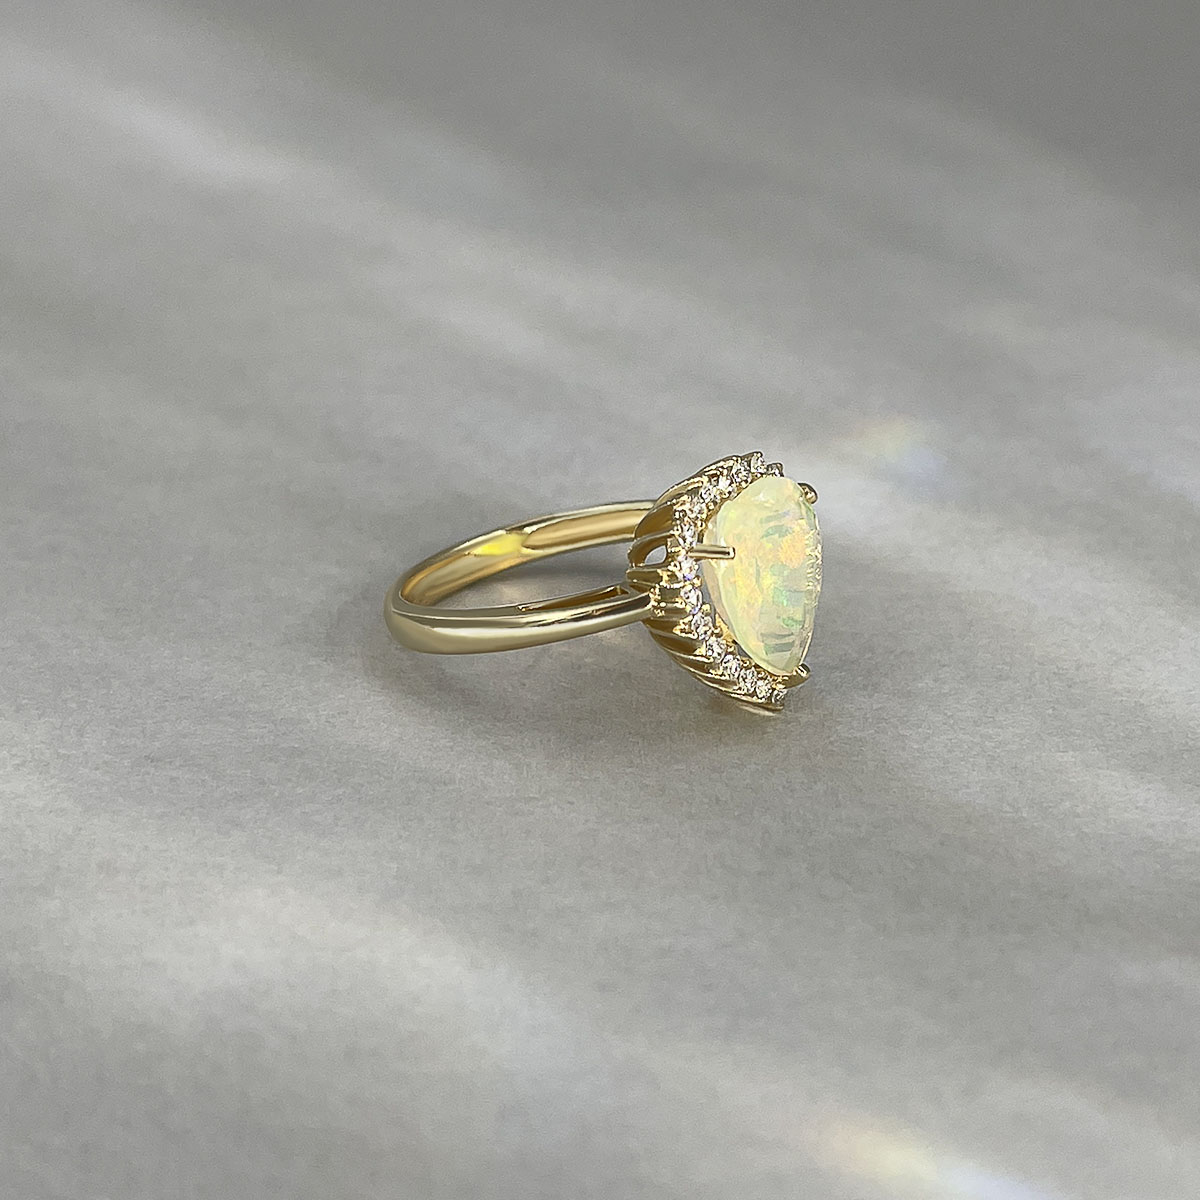 Кольцо огранки сердце с бриллиантами, опалом из желтого золота 585 пробы, фото № 3